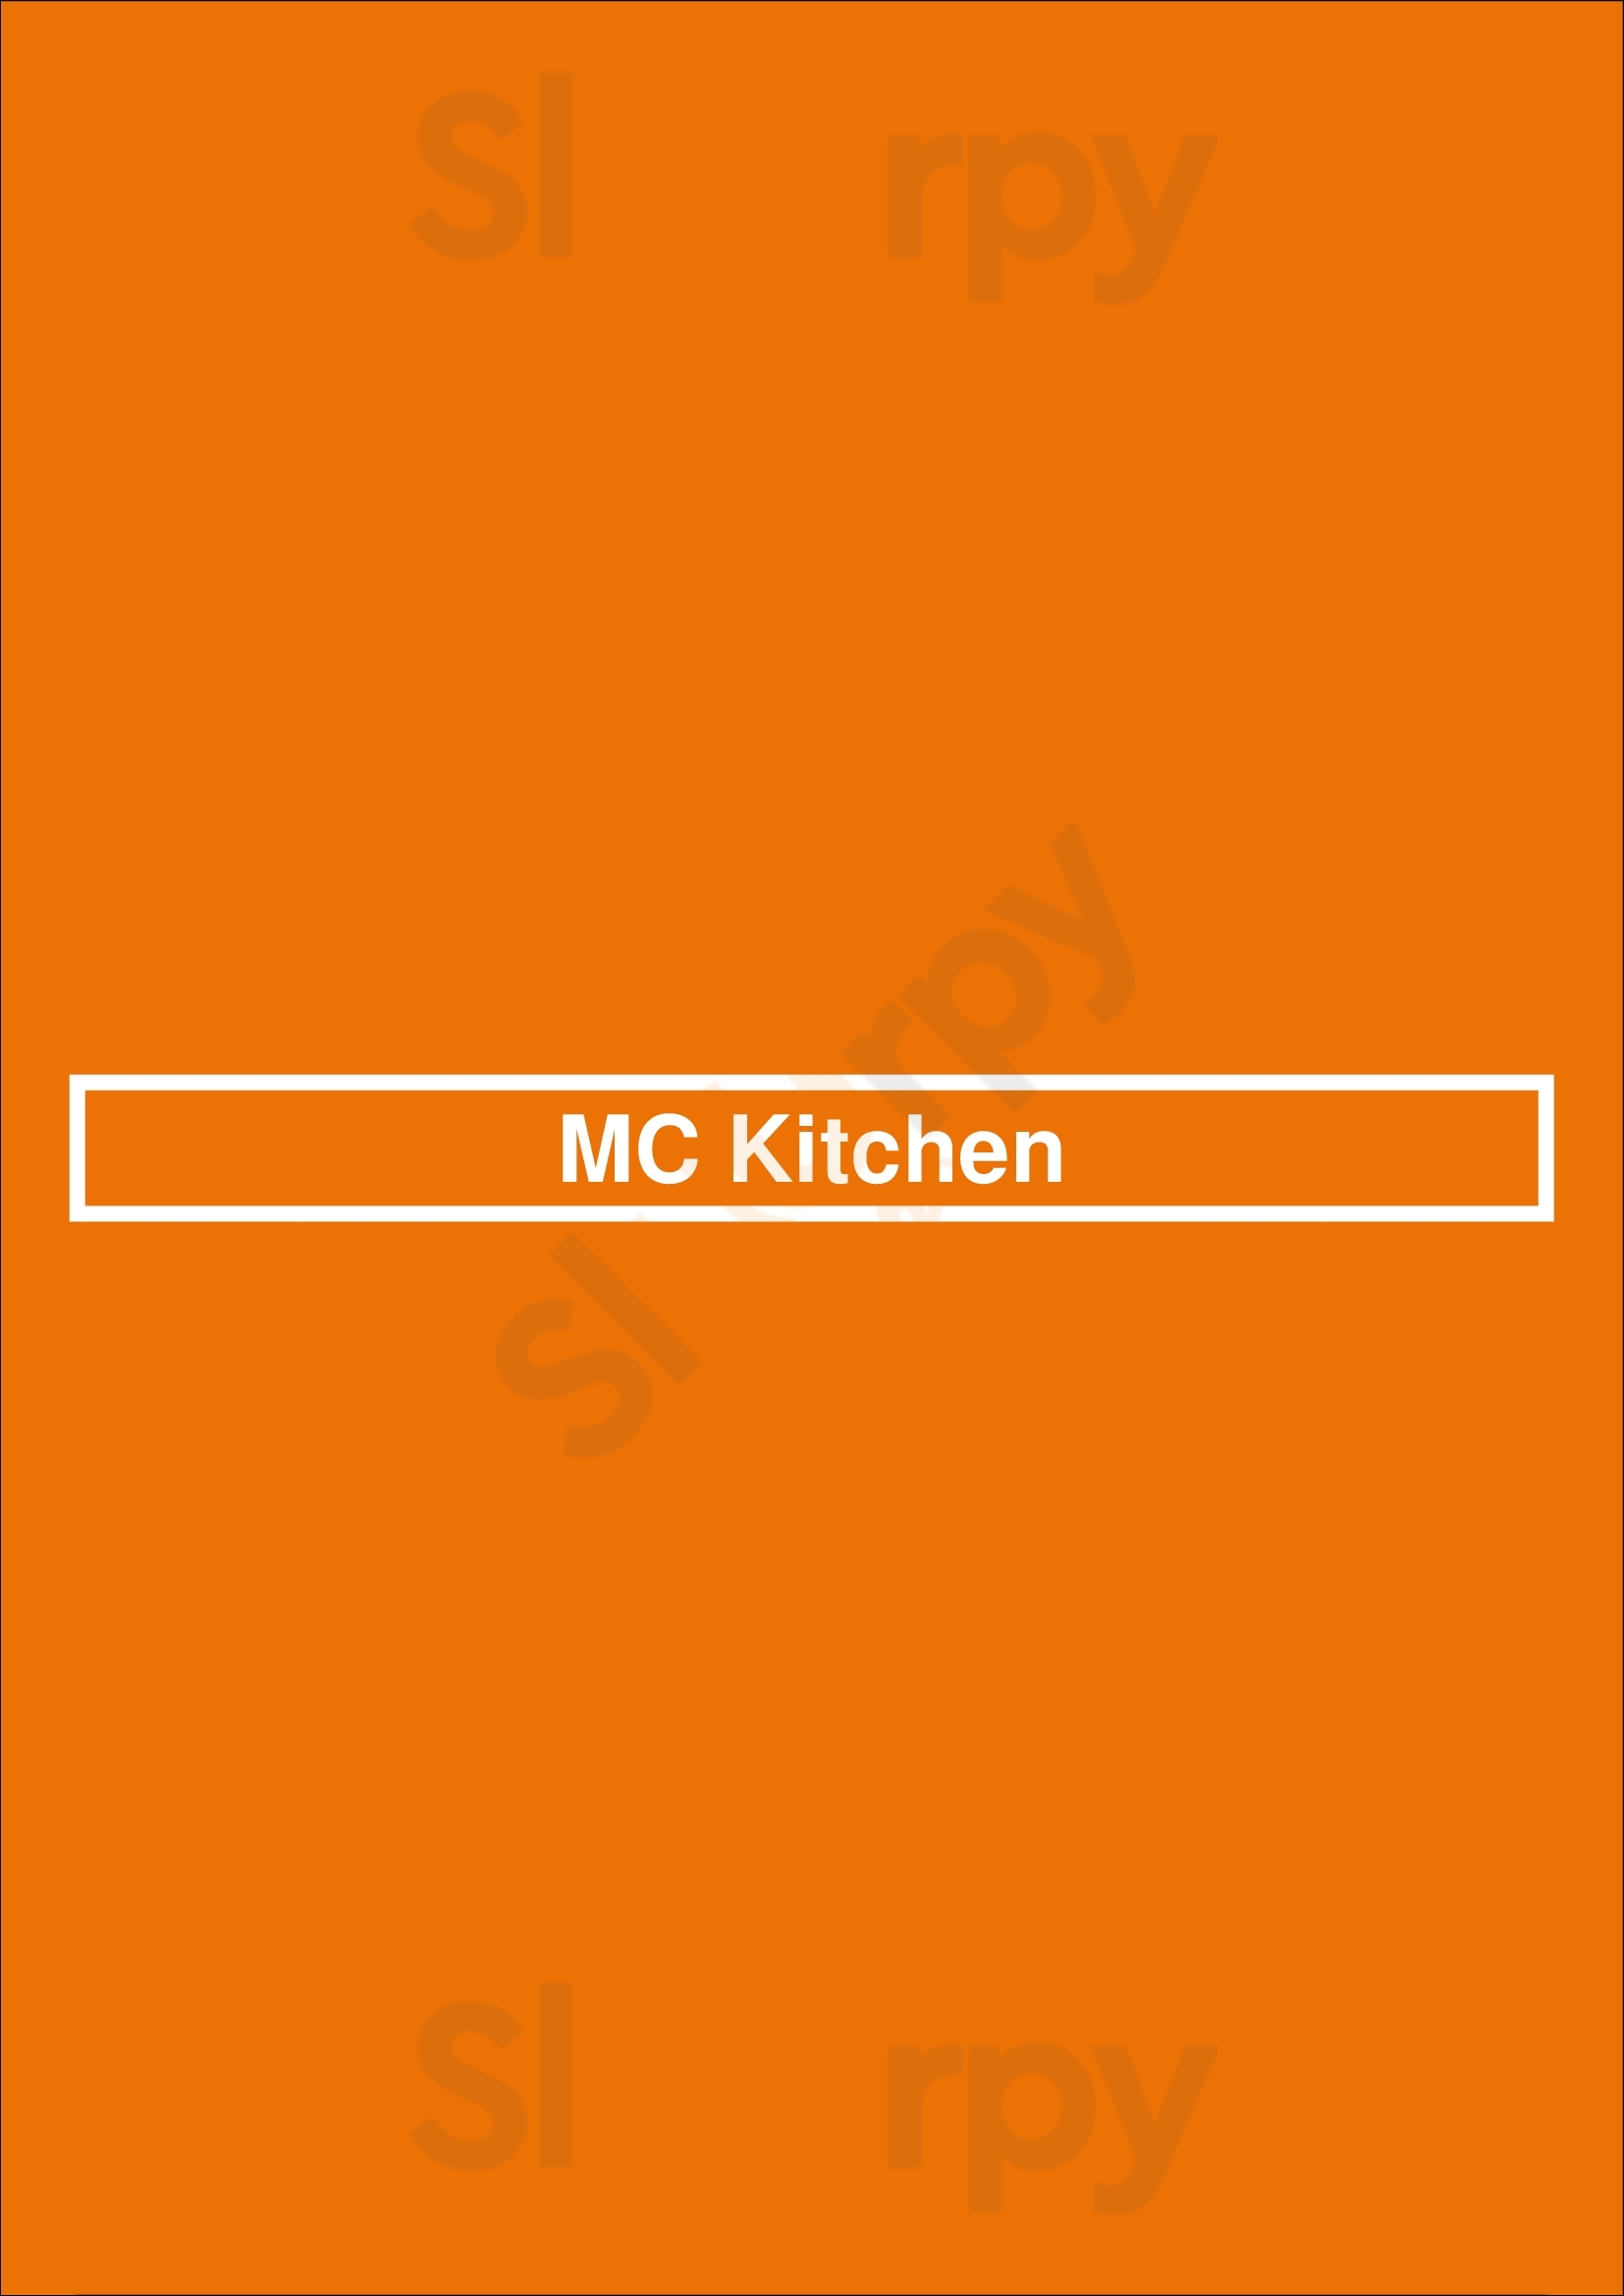 Mc Kitchen Miami Menu - 1